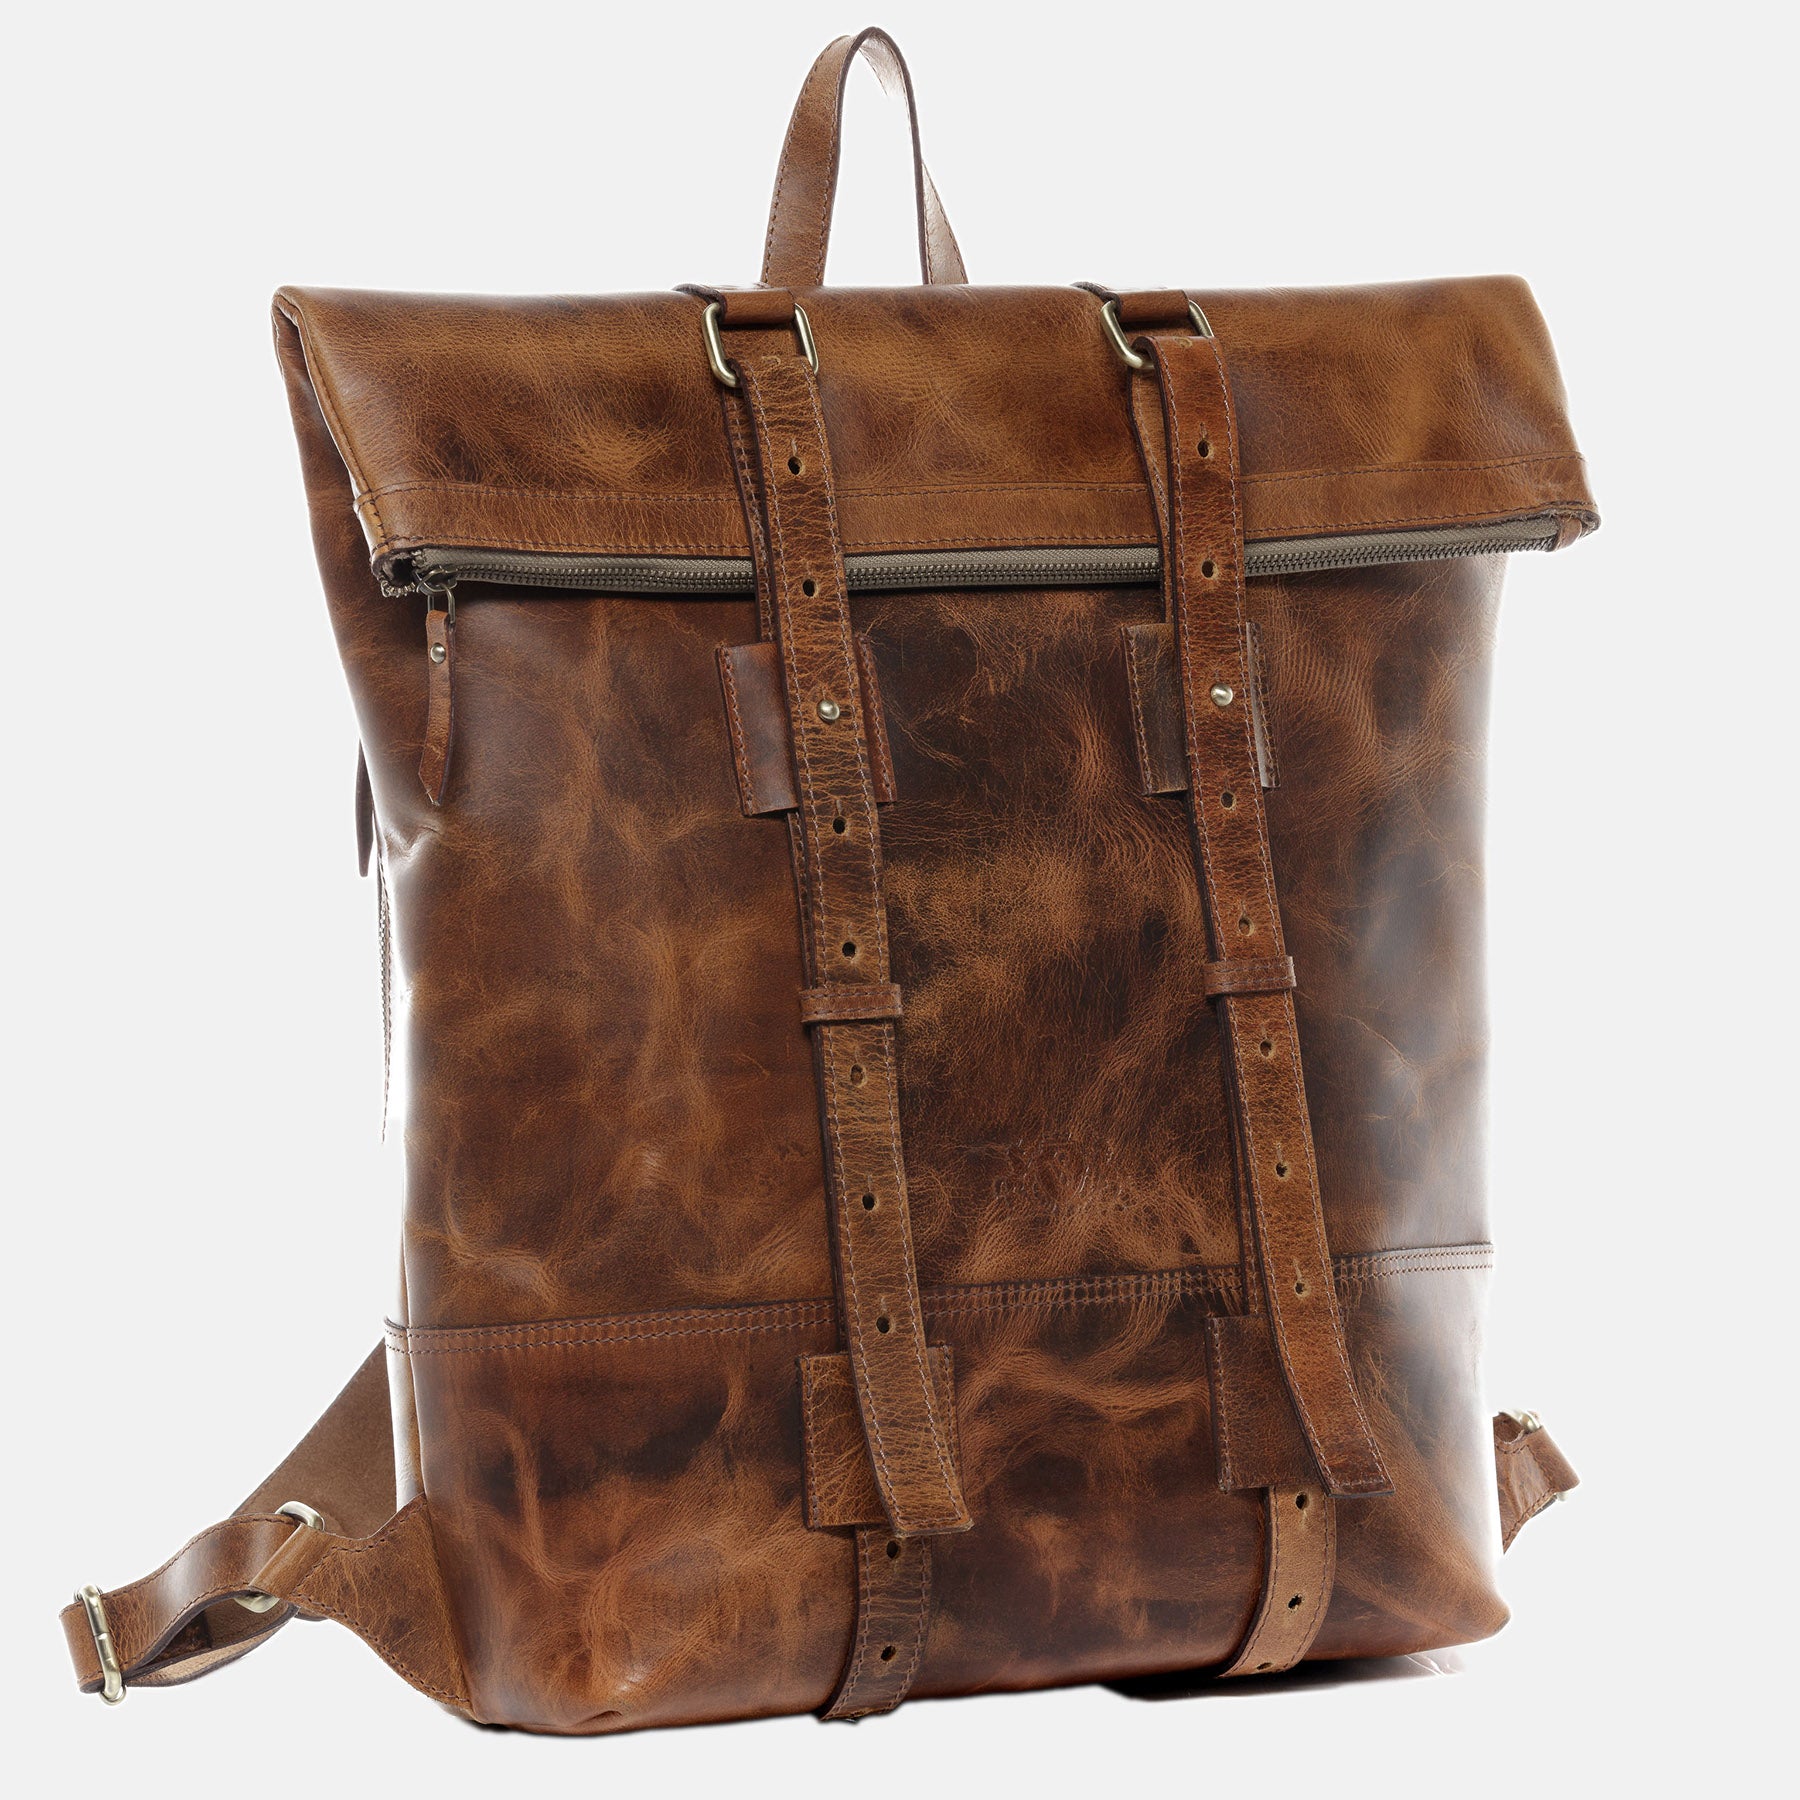 Rolltop backpack CHAZ buffalo leather camel beige